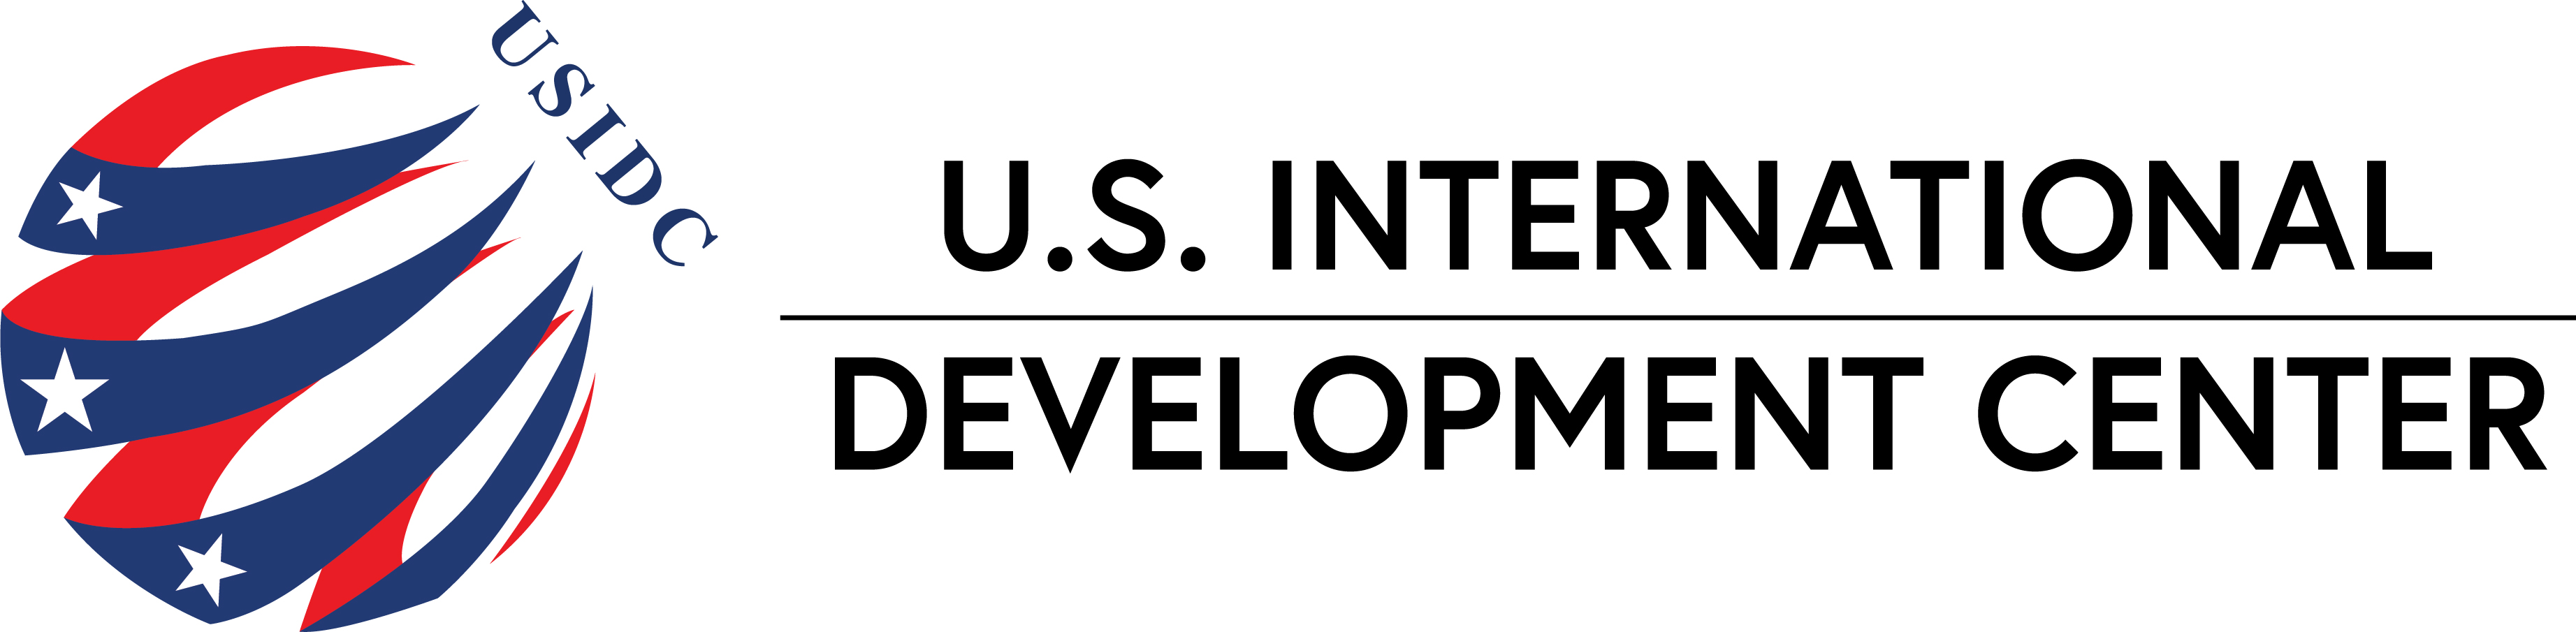 USIDC Logo